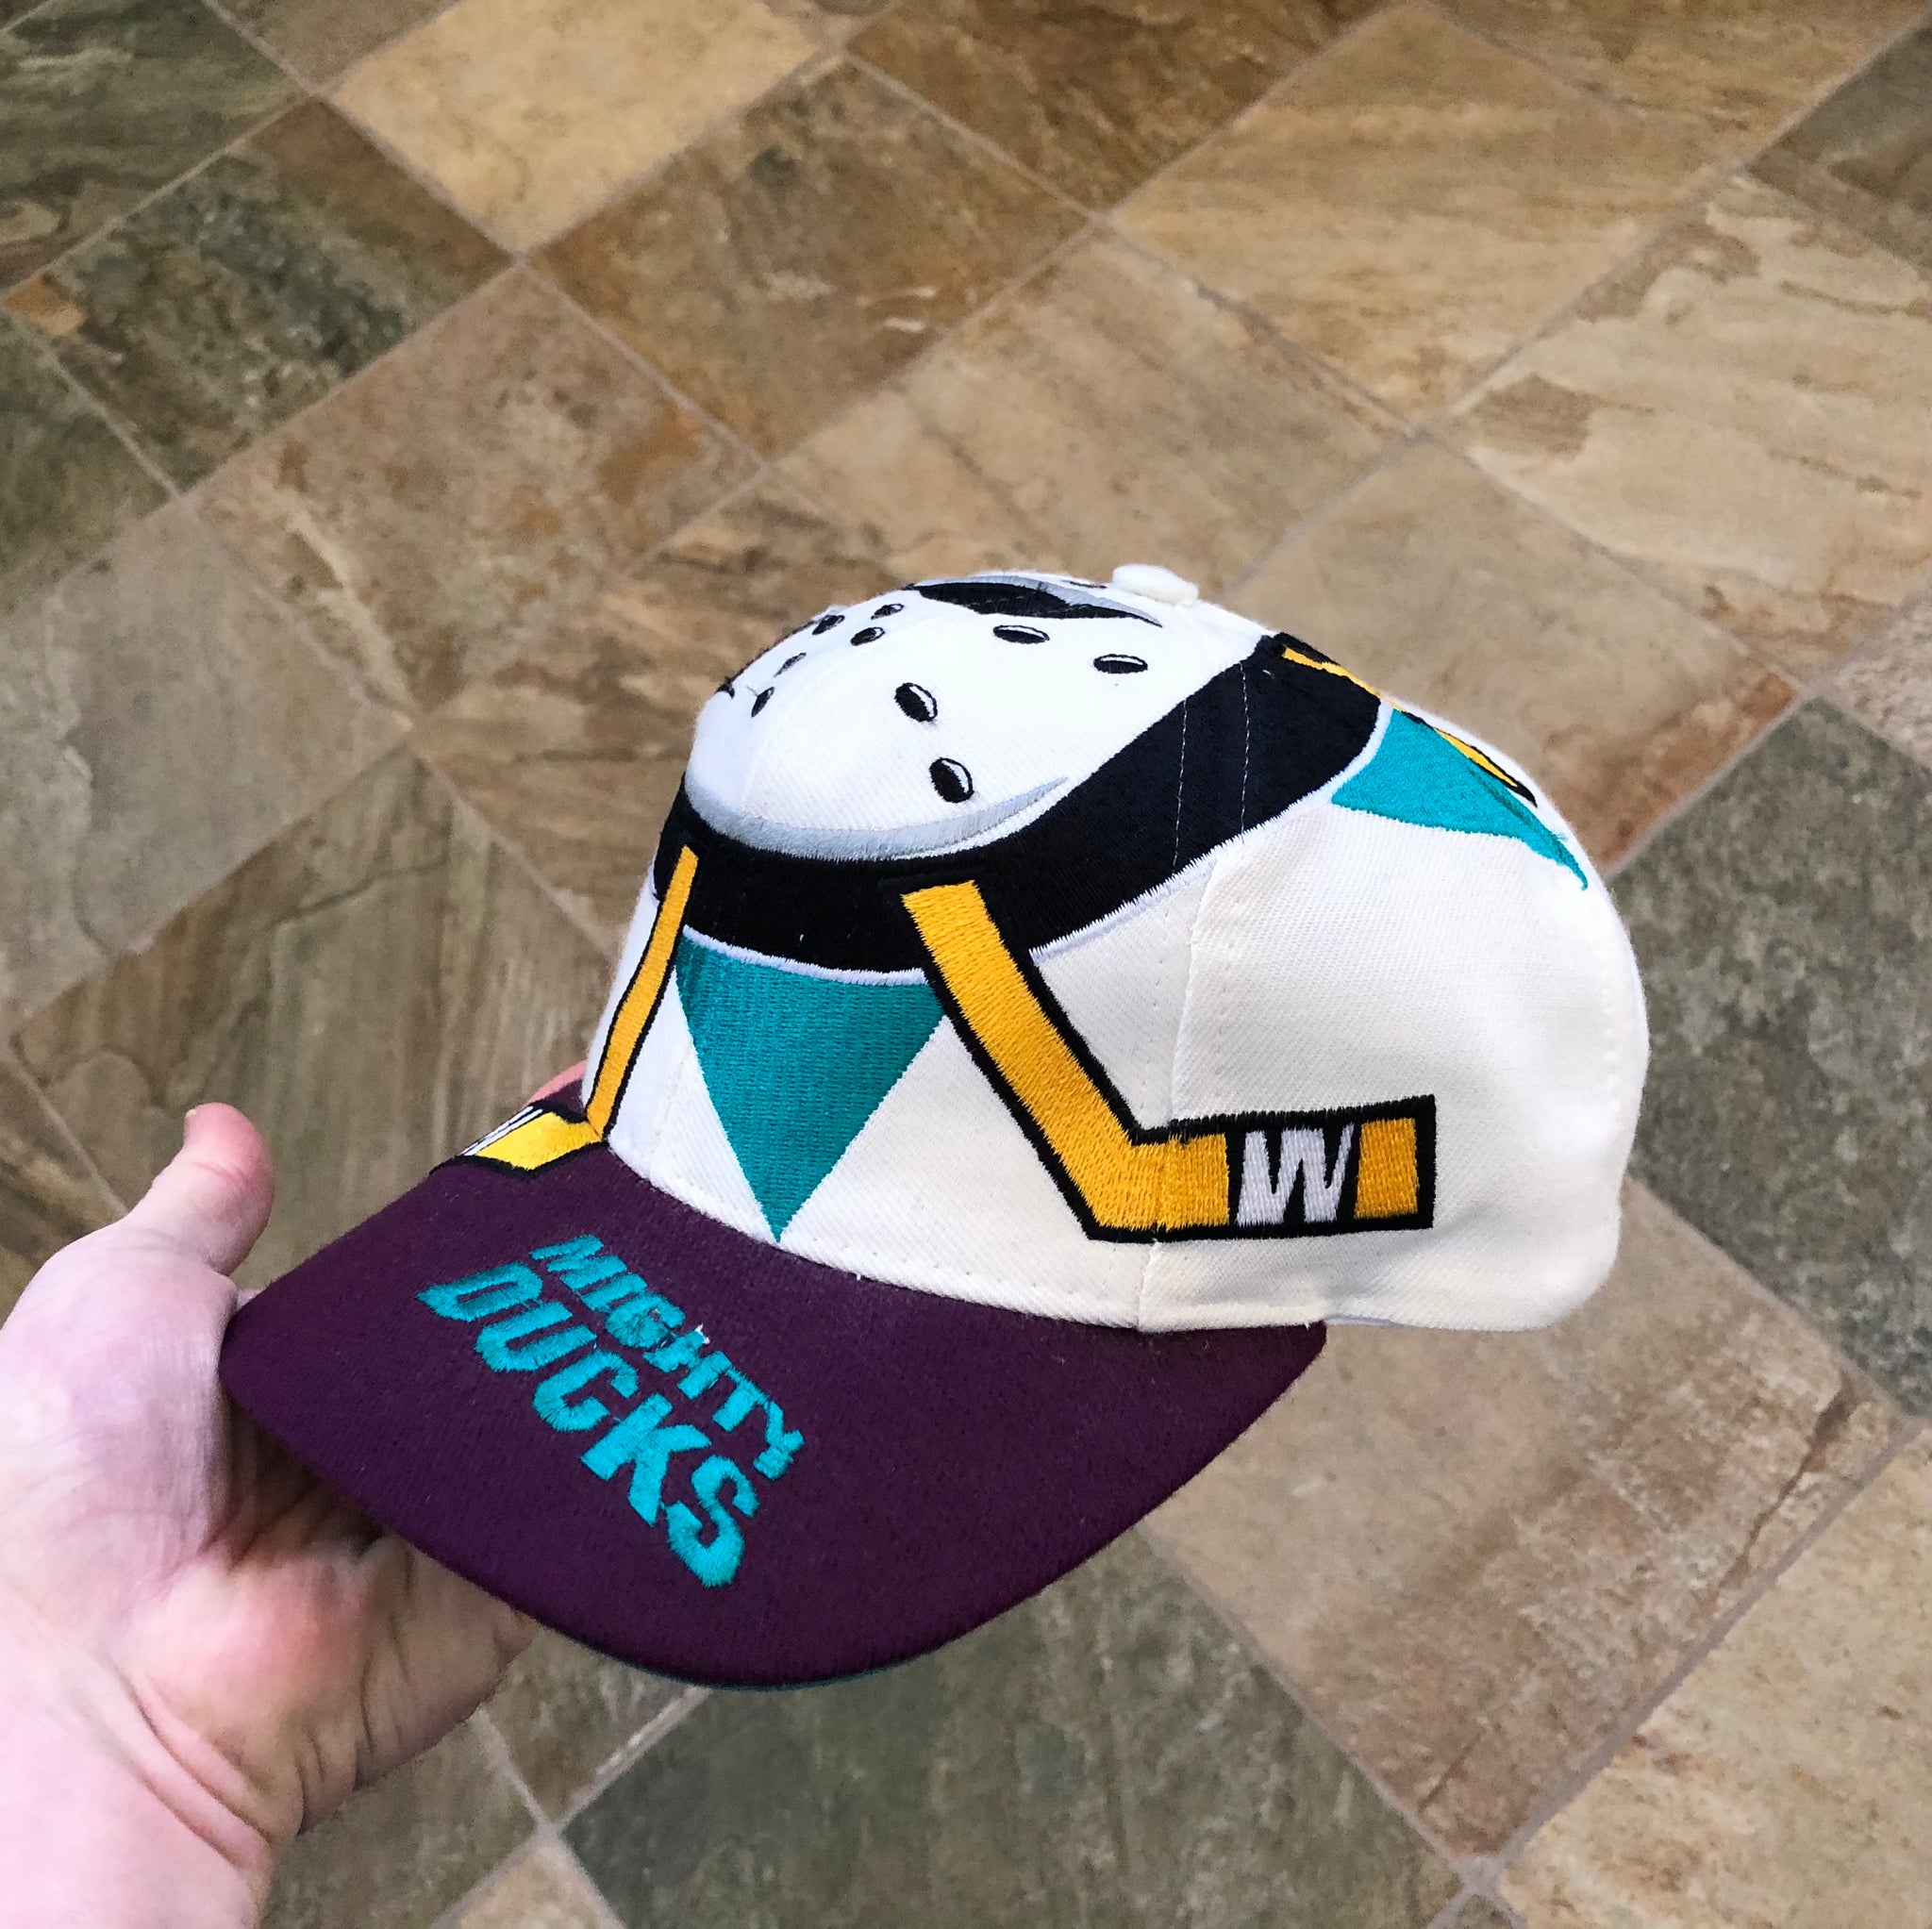 Vintage Anaheim Mighty Ducks NHL 90's Snapback Cap